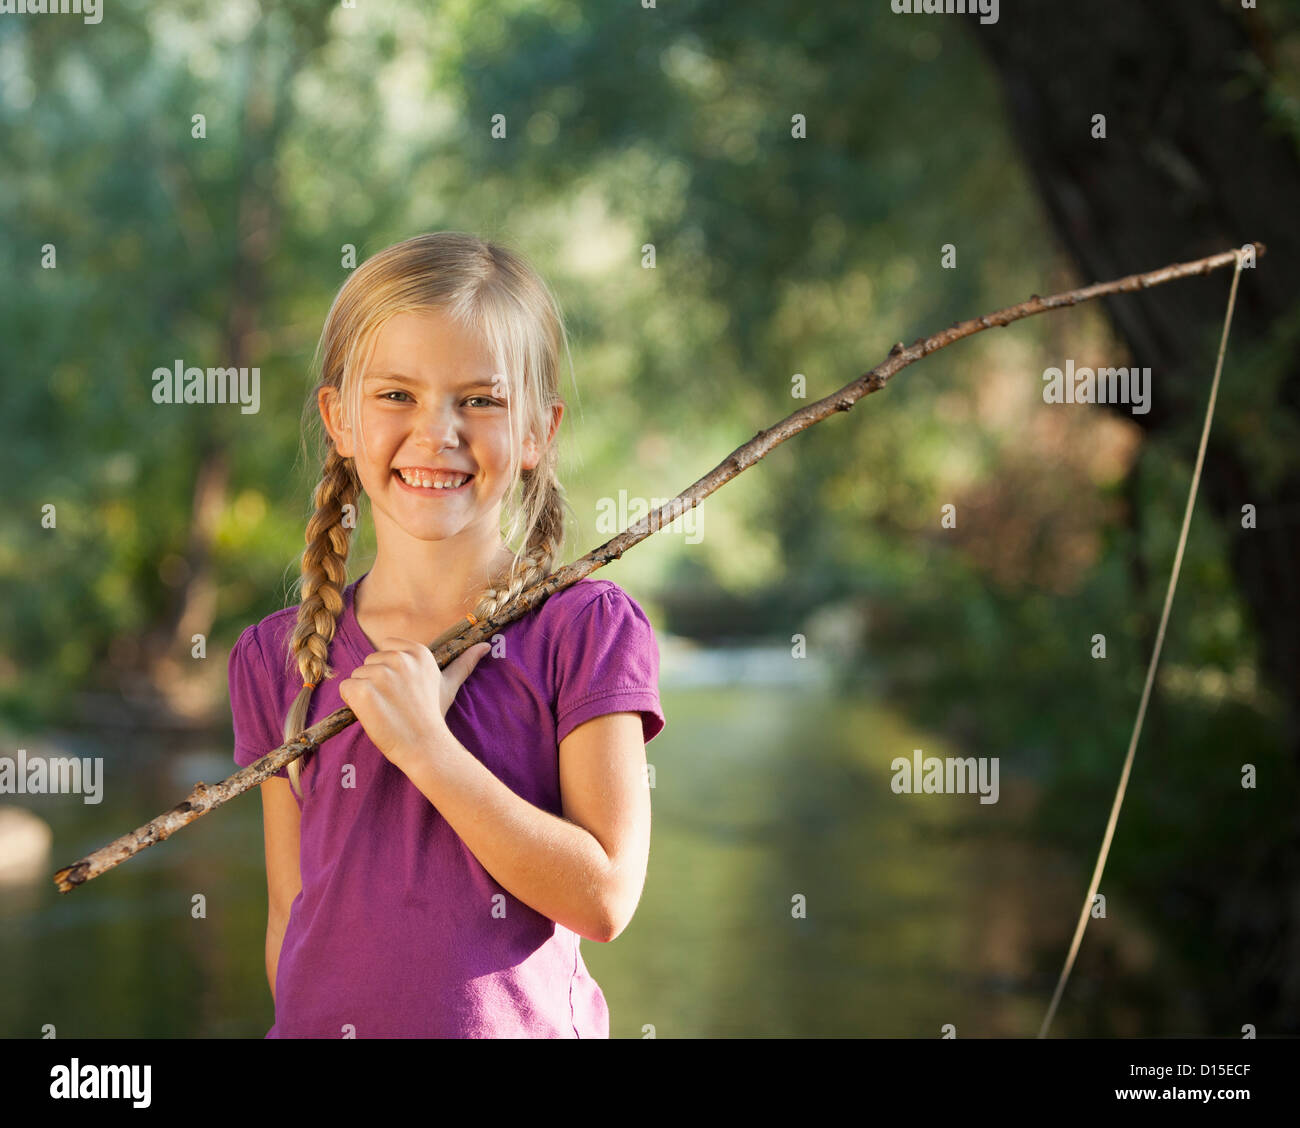 USA, Utah, Lehi, Little girl (4-5) holding wooden stick fishing